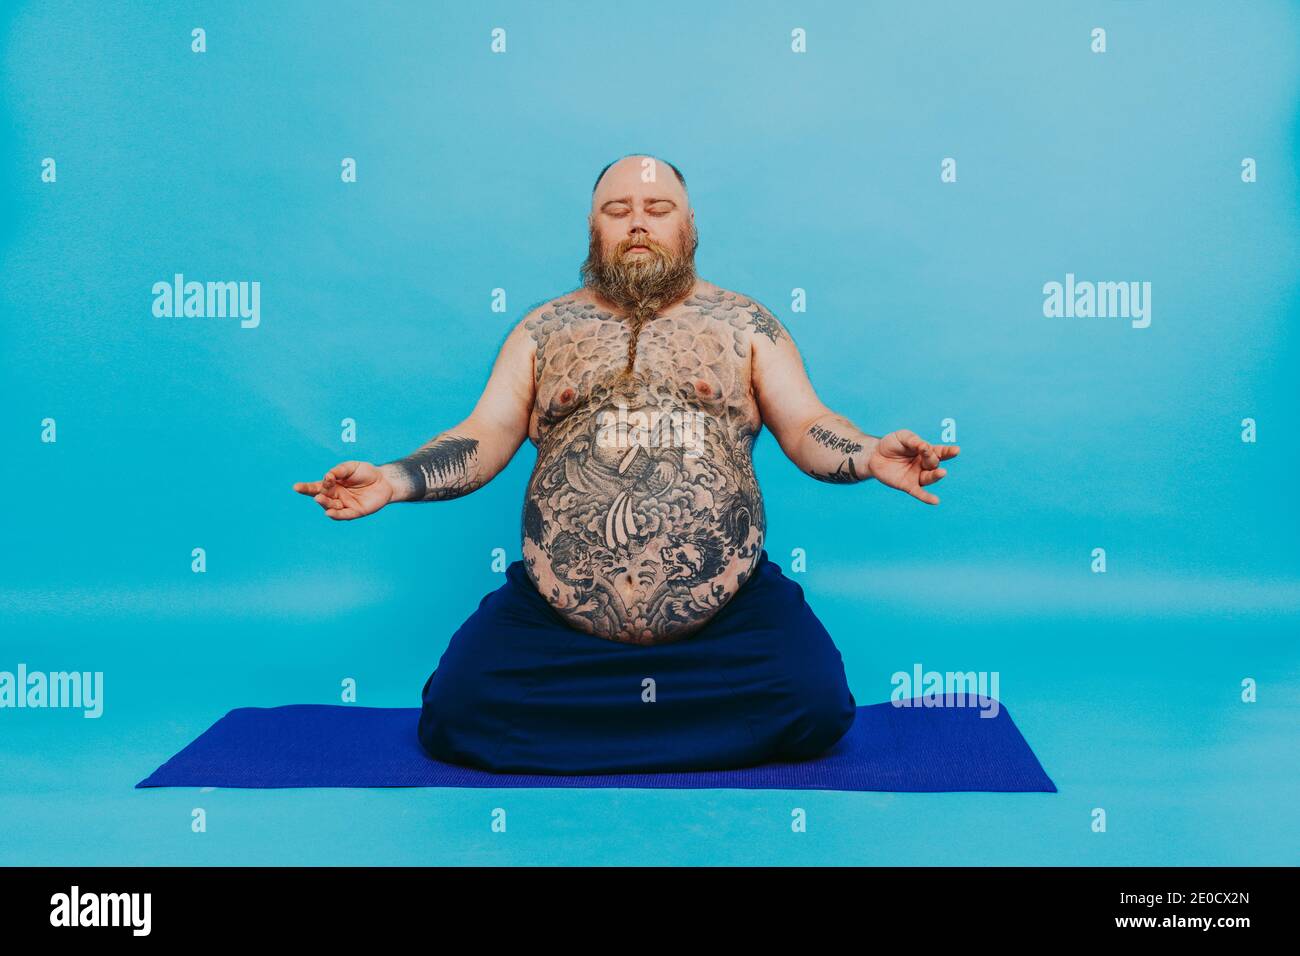 Funny fat man doing yoga meditation, funny and ironic character Stock Photo